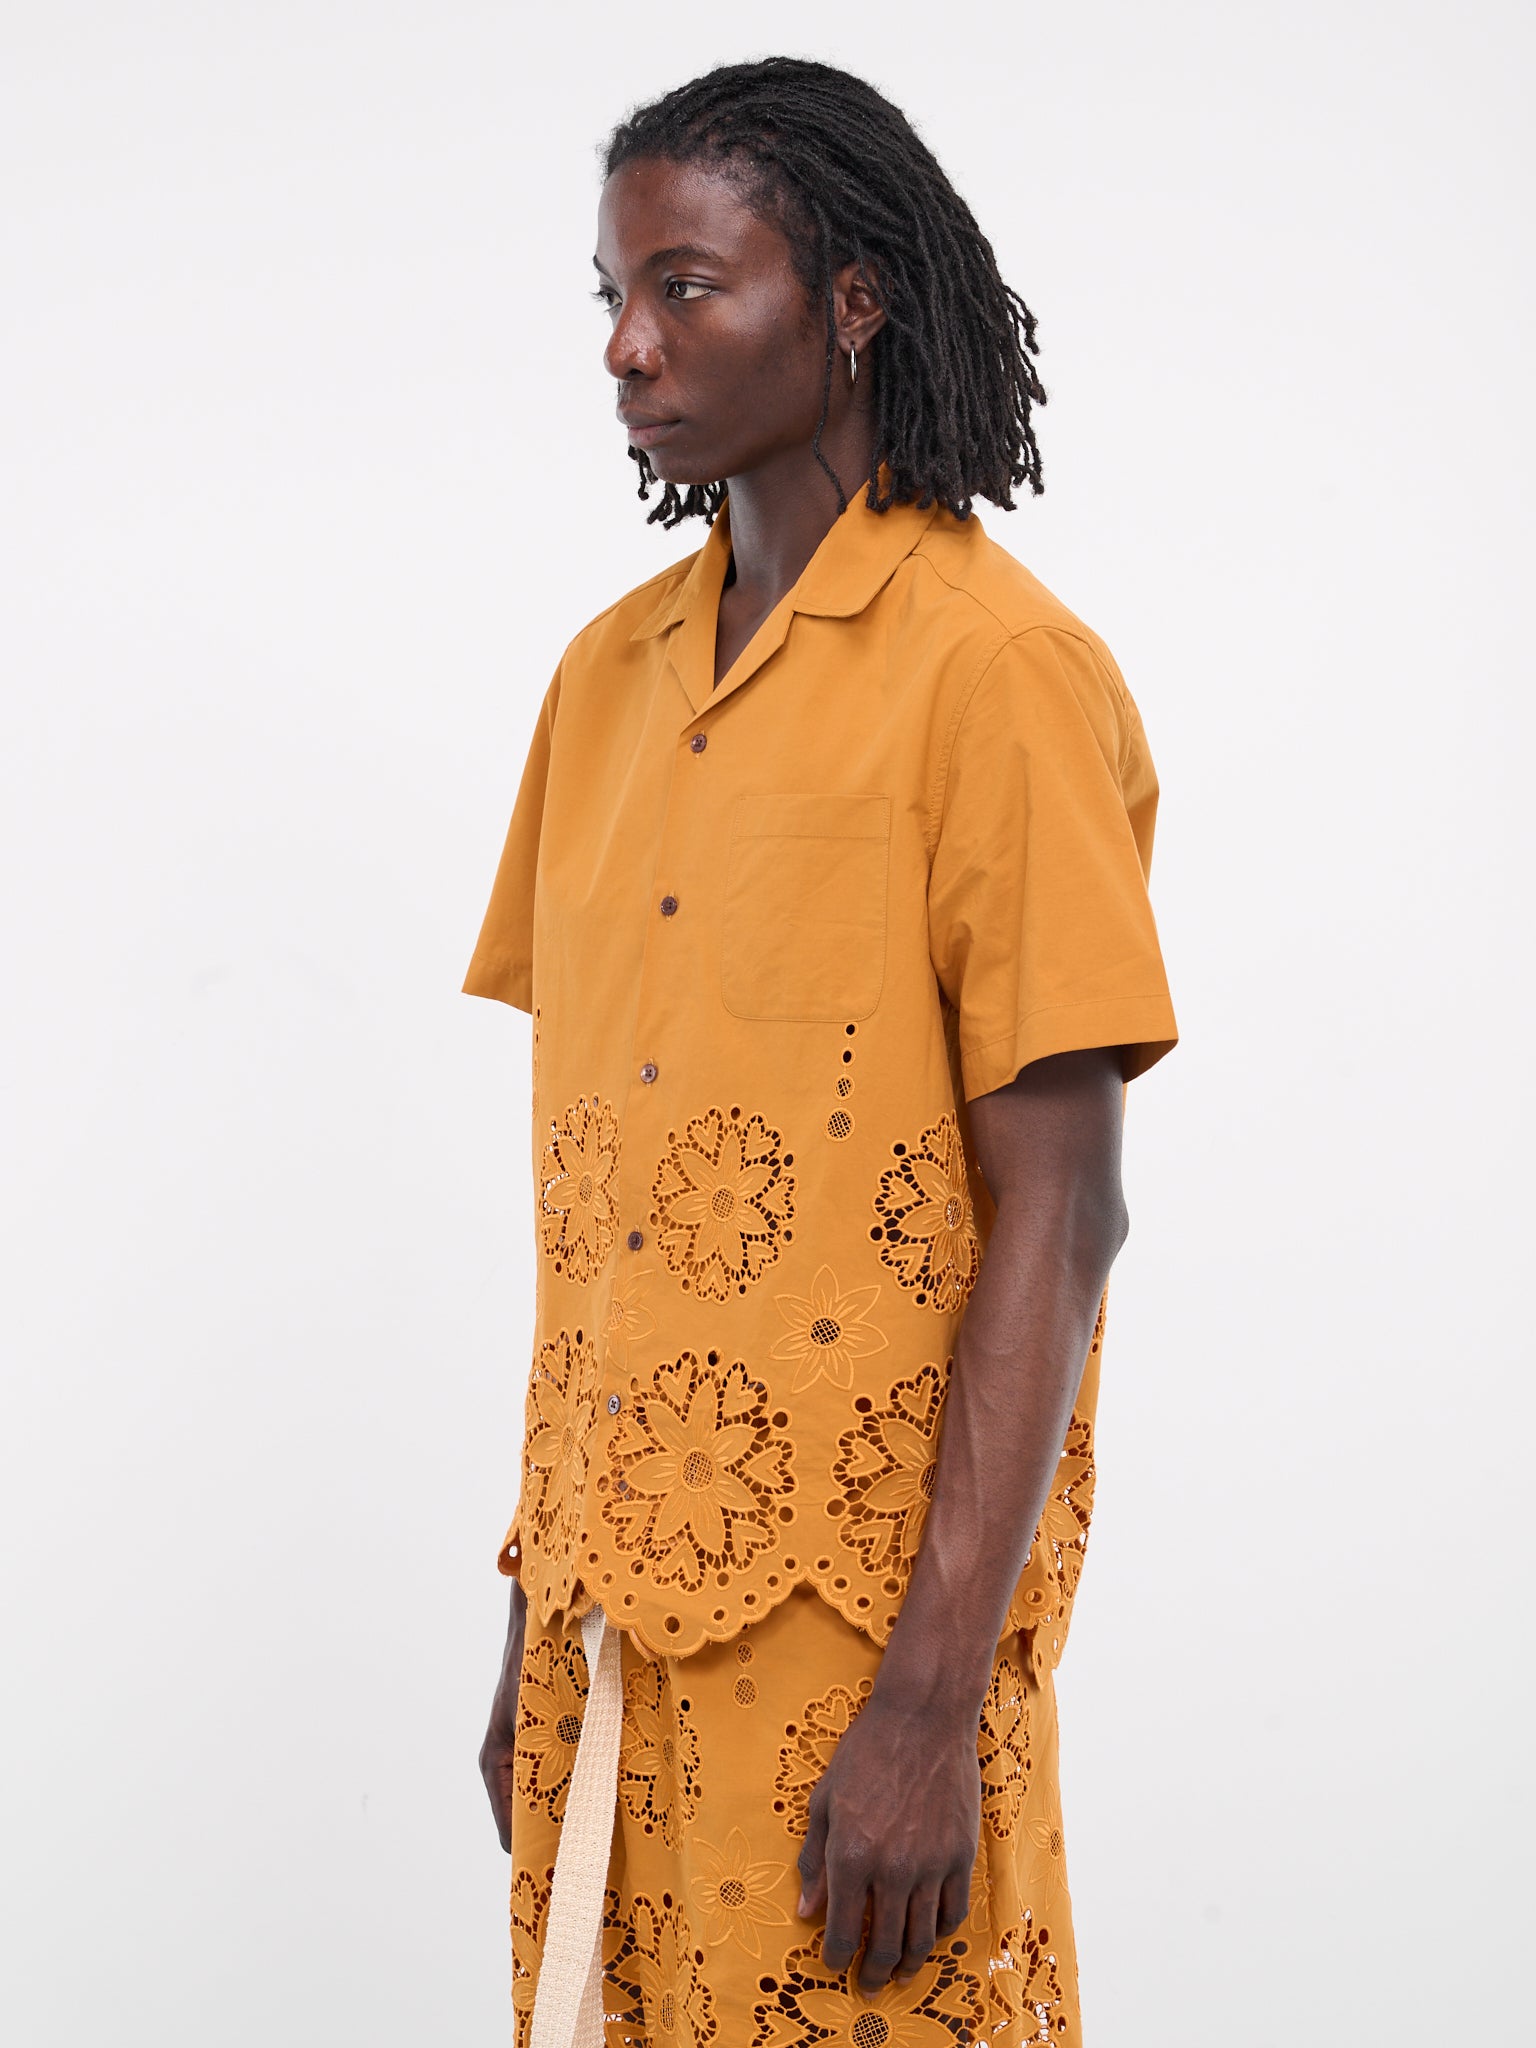 Ture Embroidered Shirt (TURE-EMB-M22W691-BURNT-ORANGE)